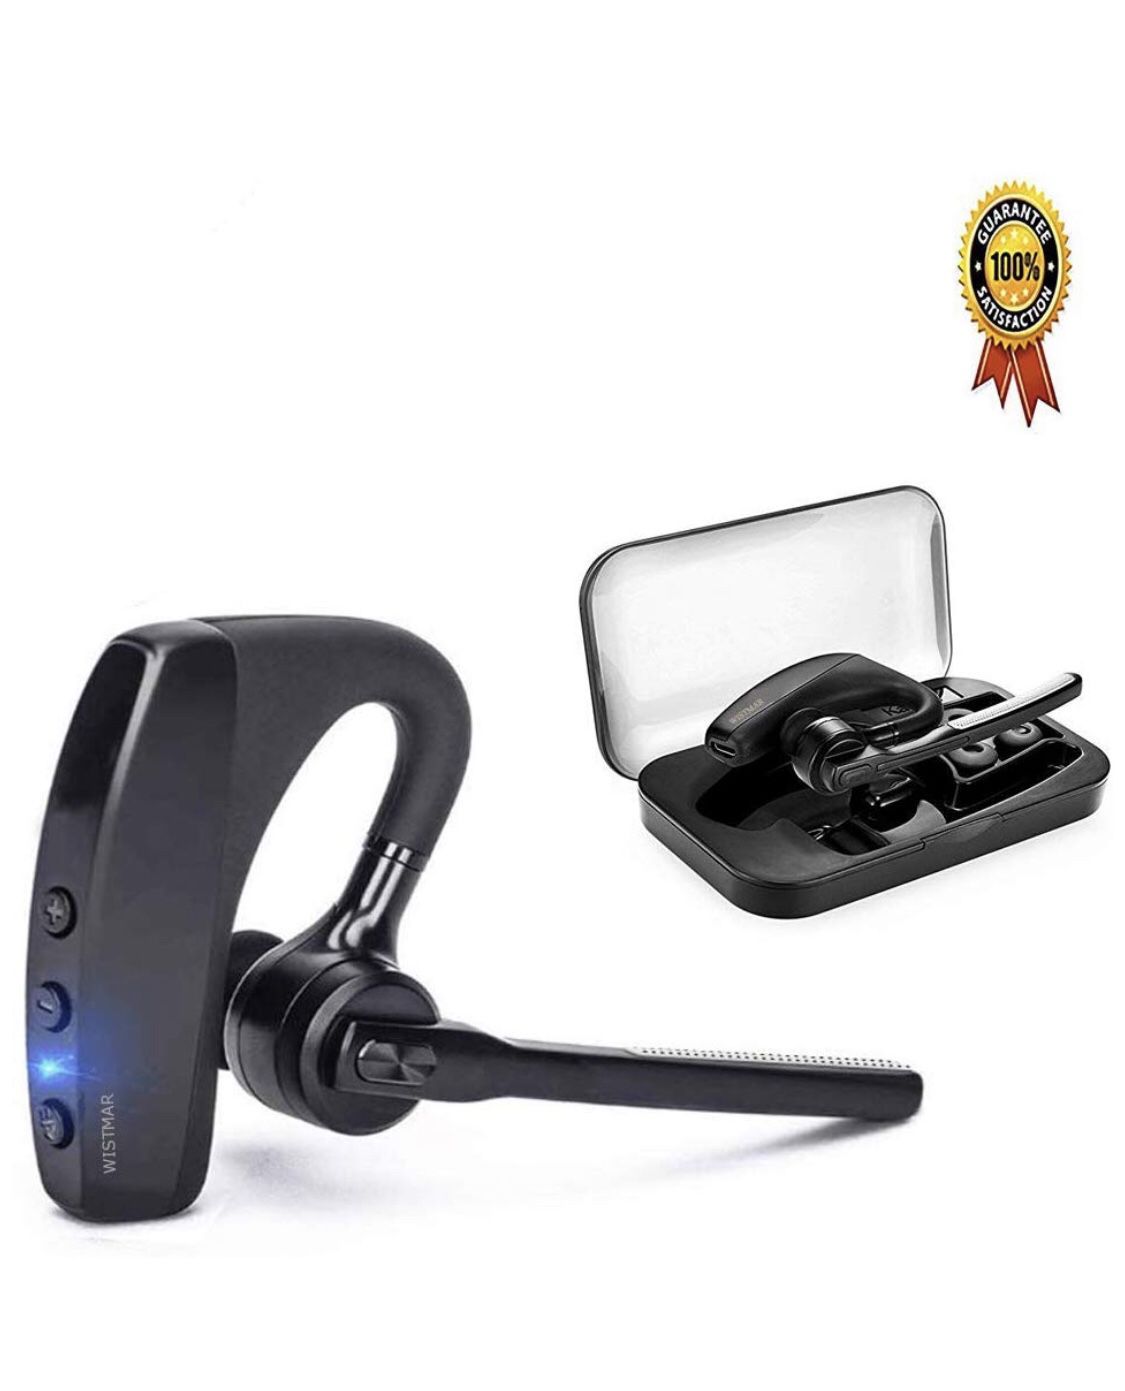 [ Latest Version] WISTMAR SoundBuds Slim Bluetooth Wireless Headset Ear Hooks Business HD Stereo Earphones Headphones Noise Cancelling in-Ear Earbuds